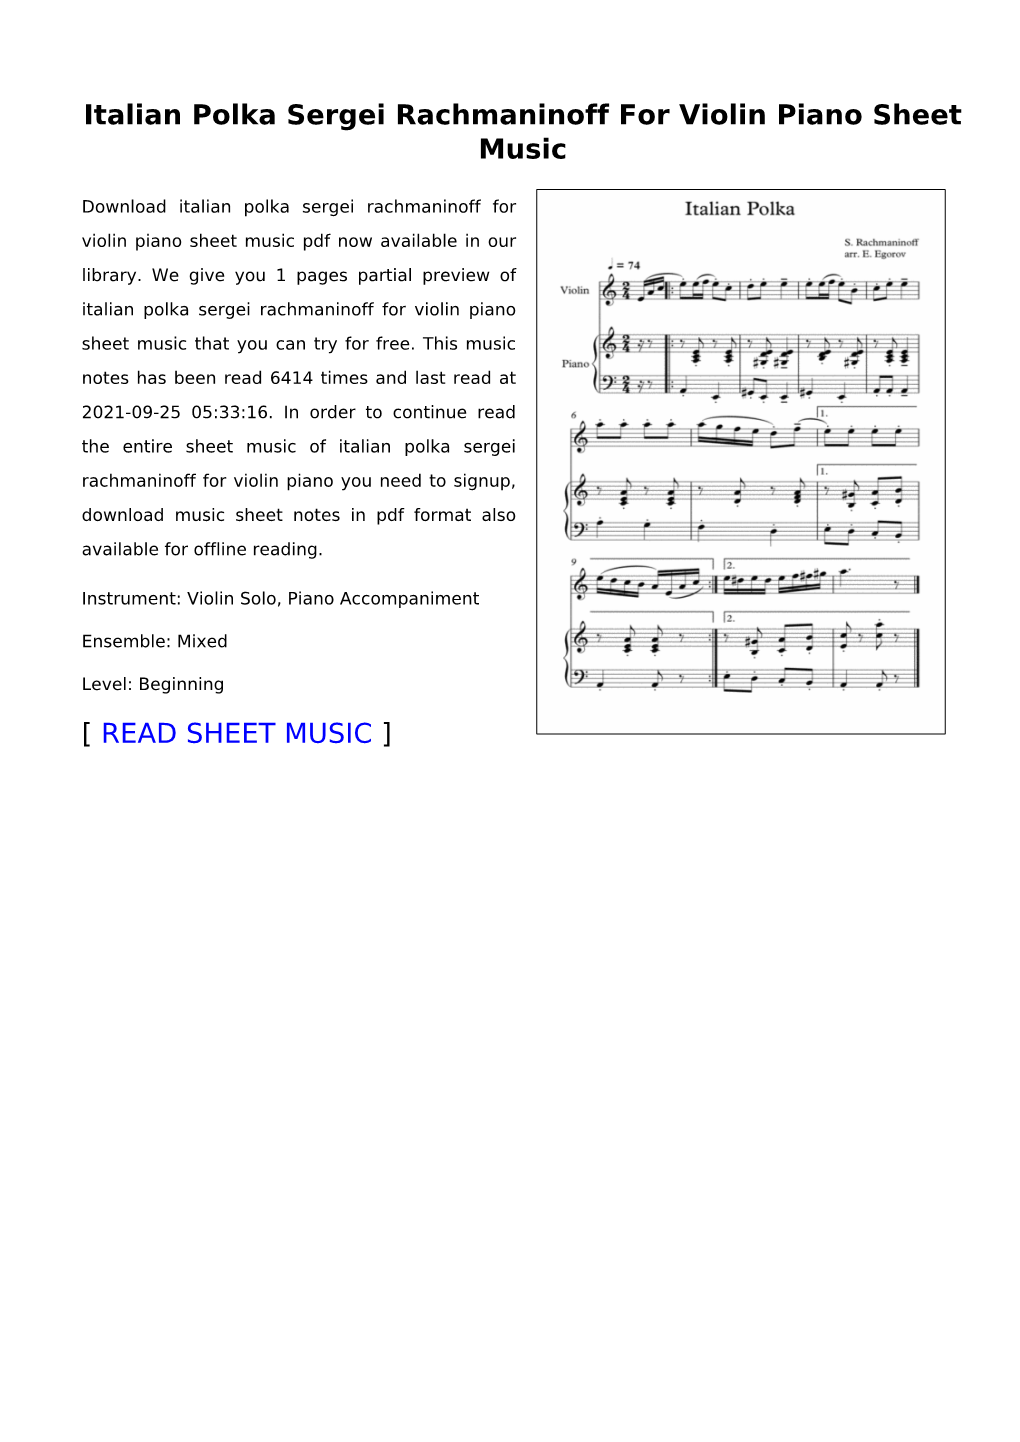 Italian Polka Sergei Rachmaninoff for Violin Piano Sheet Music